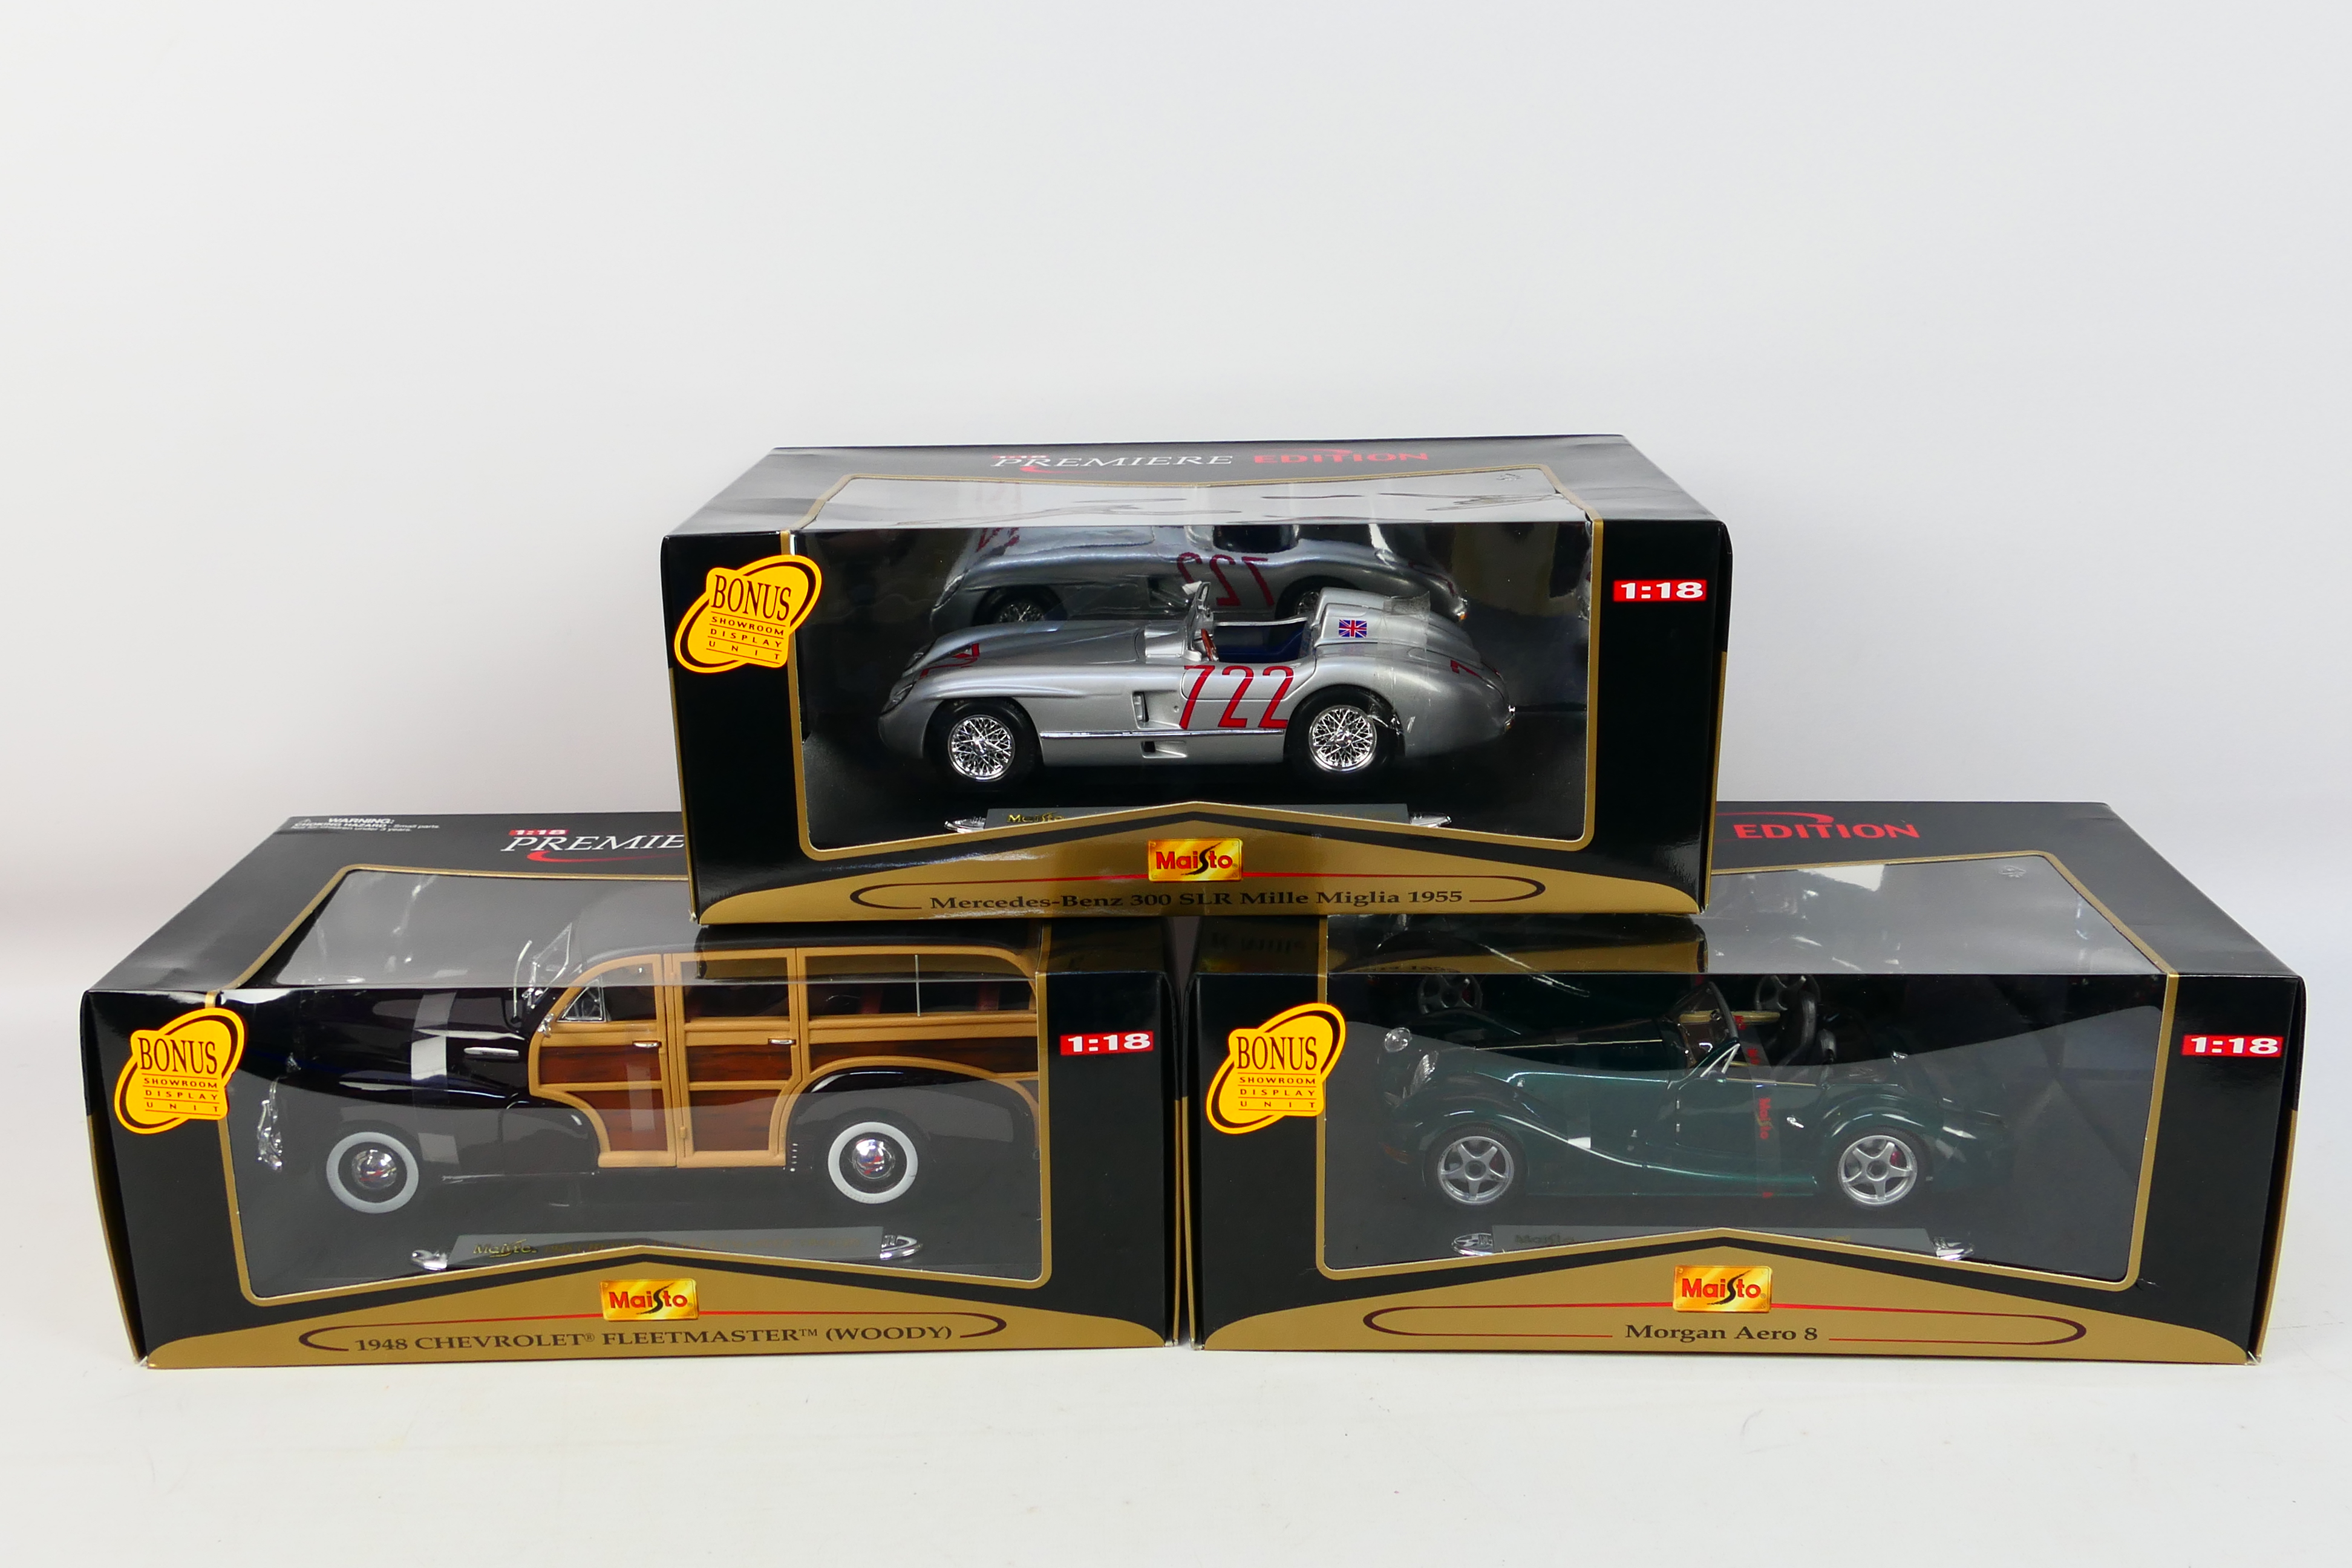 Maisto - Three boxed Maisto 'Premiere Edition' 1:18 scale diecast model cars.